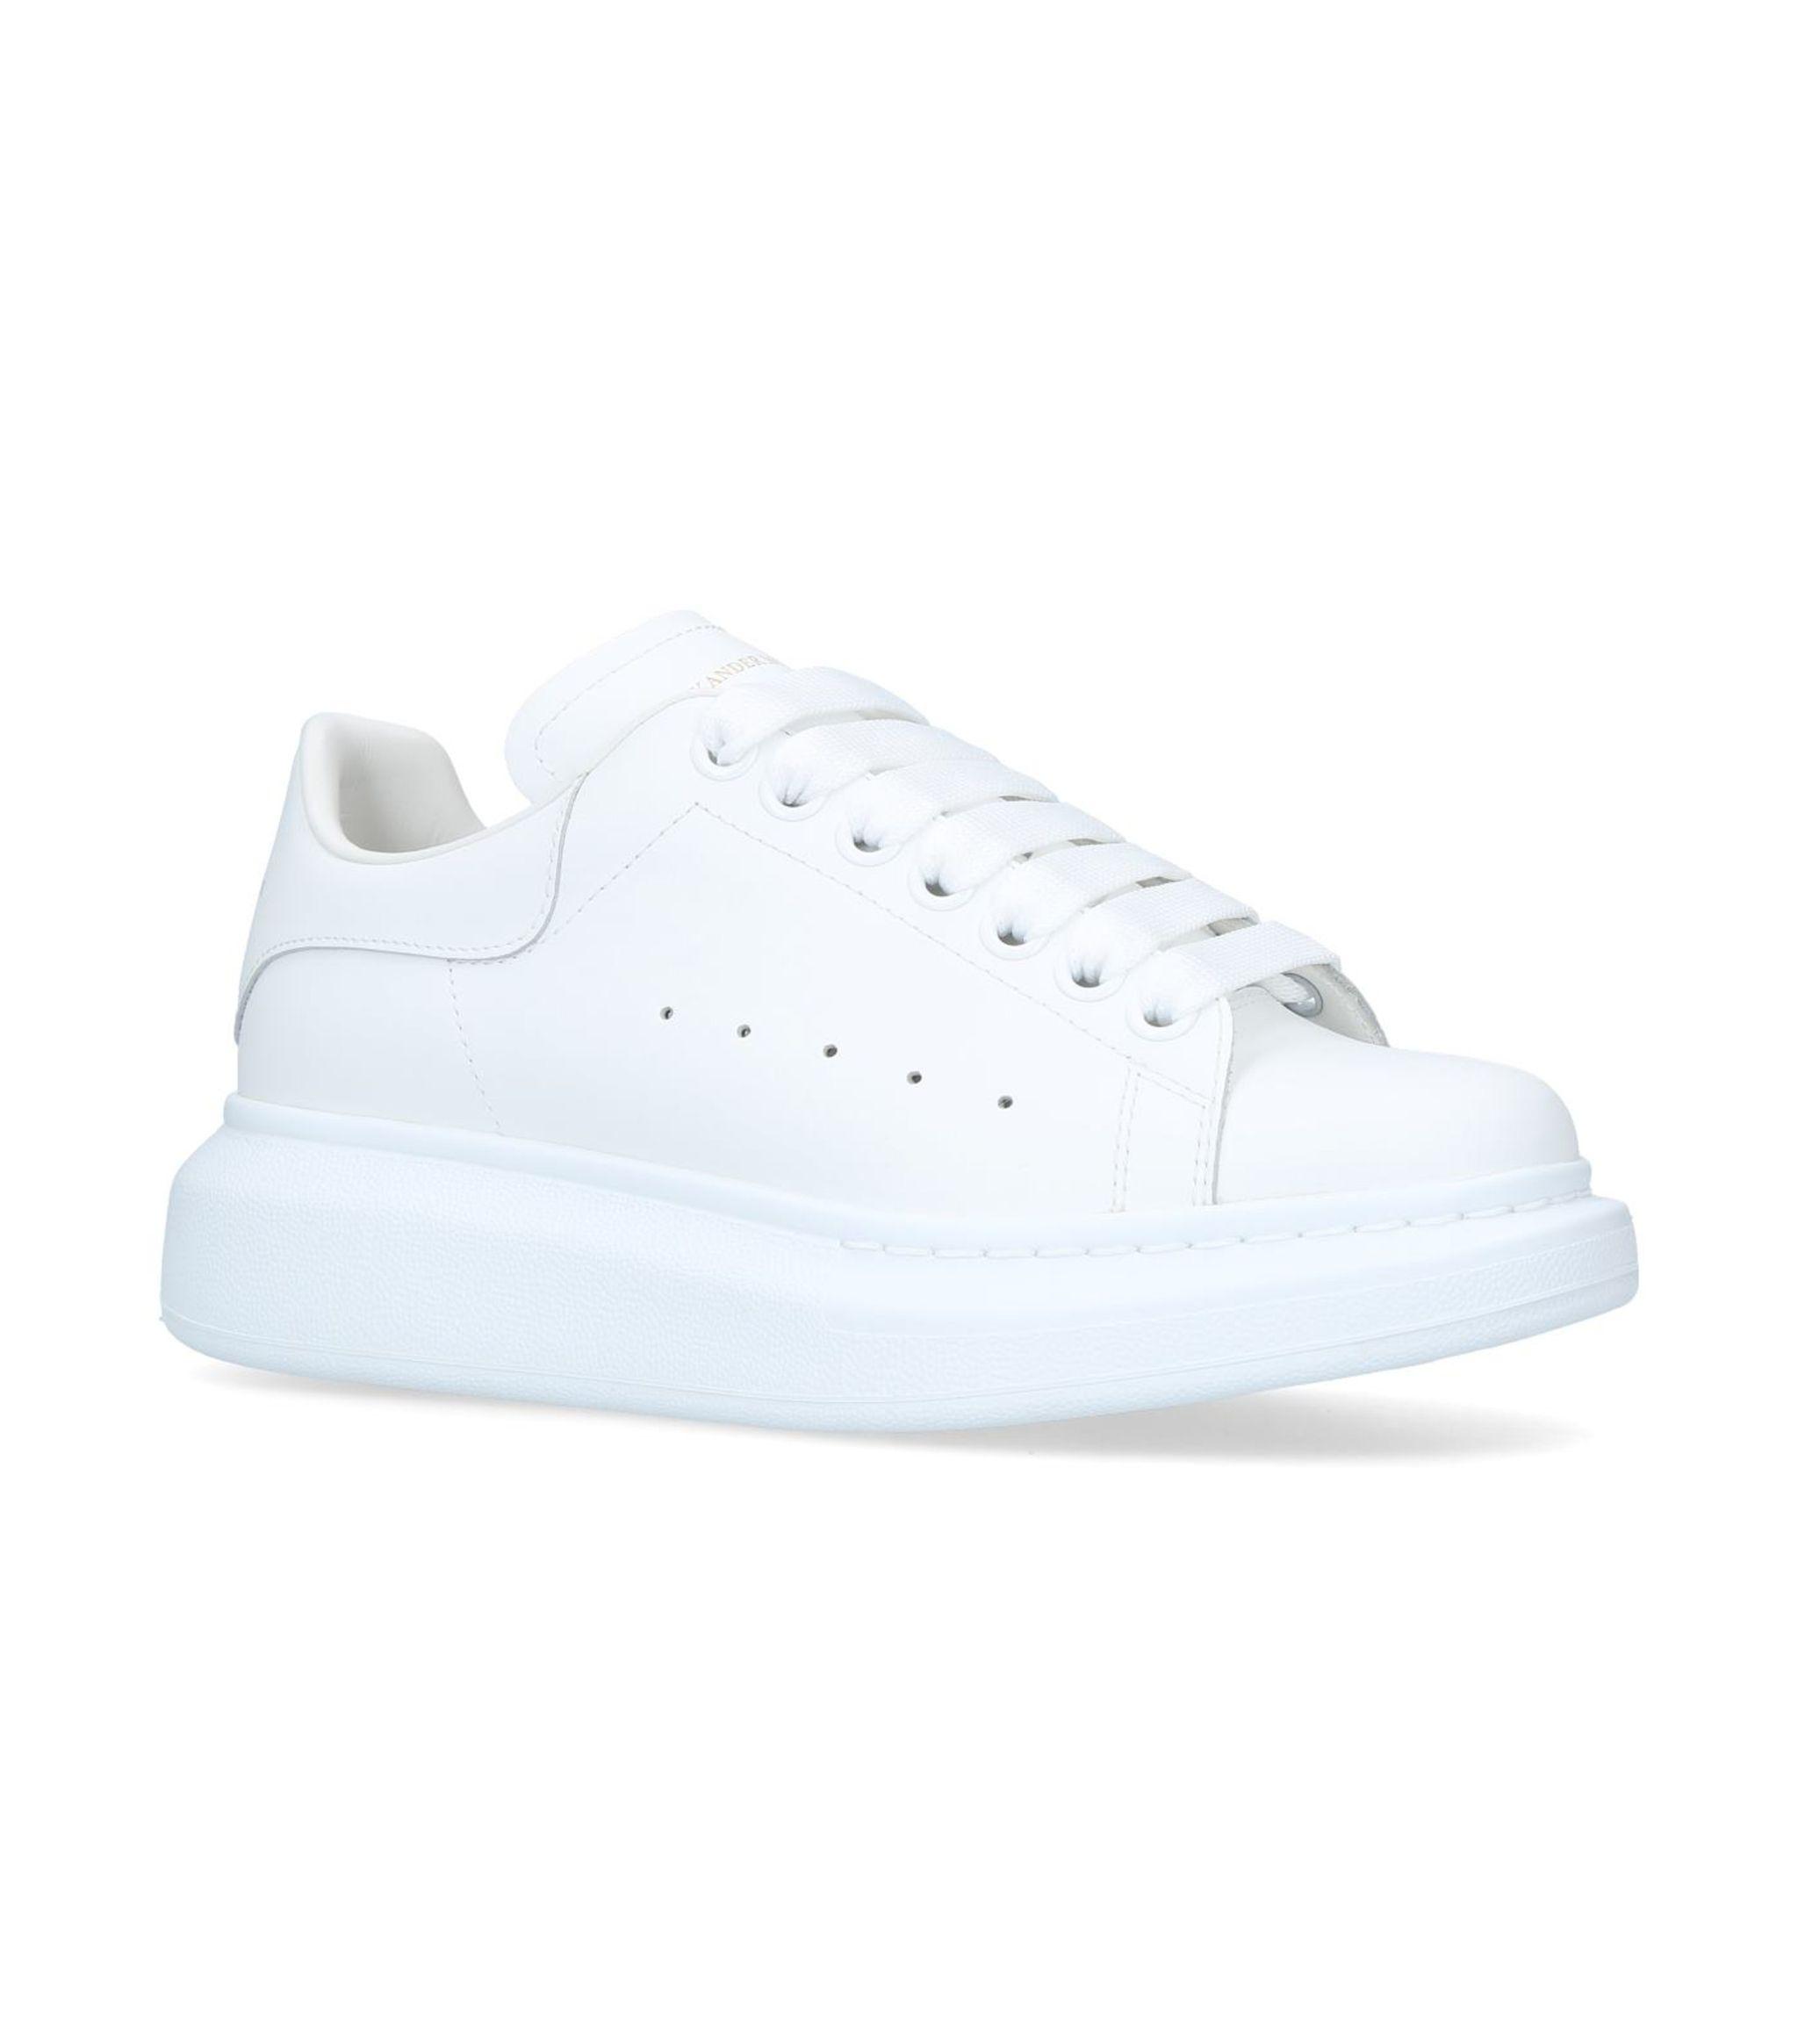 Alexander McQueen Leather Runway Sneakers in White - Lyst